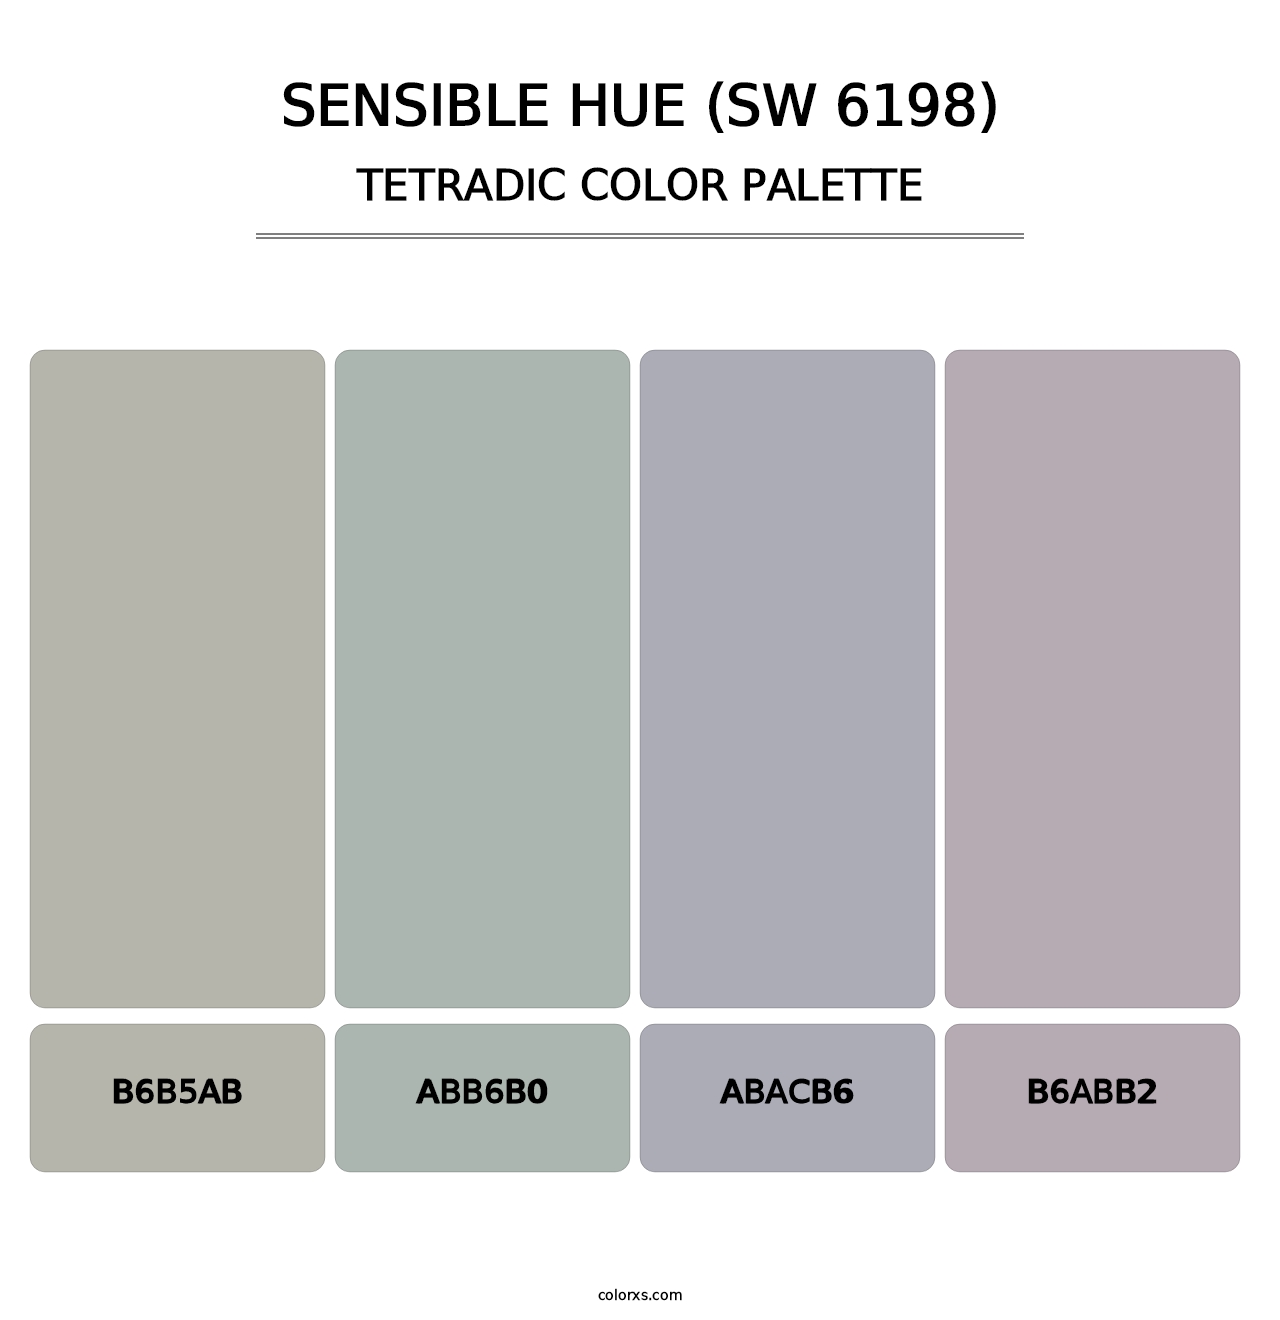 Sensible Hue (SW 6198) - Tetradic Color Palette